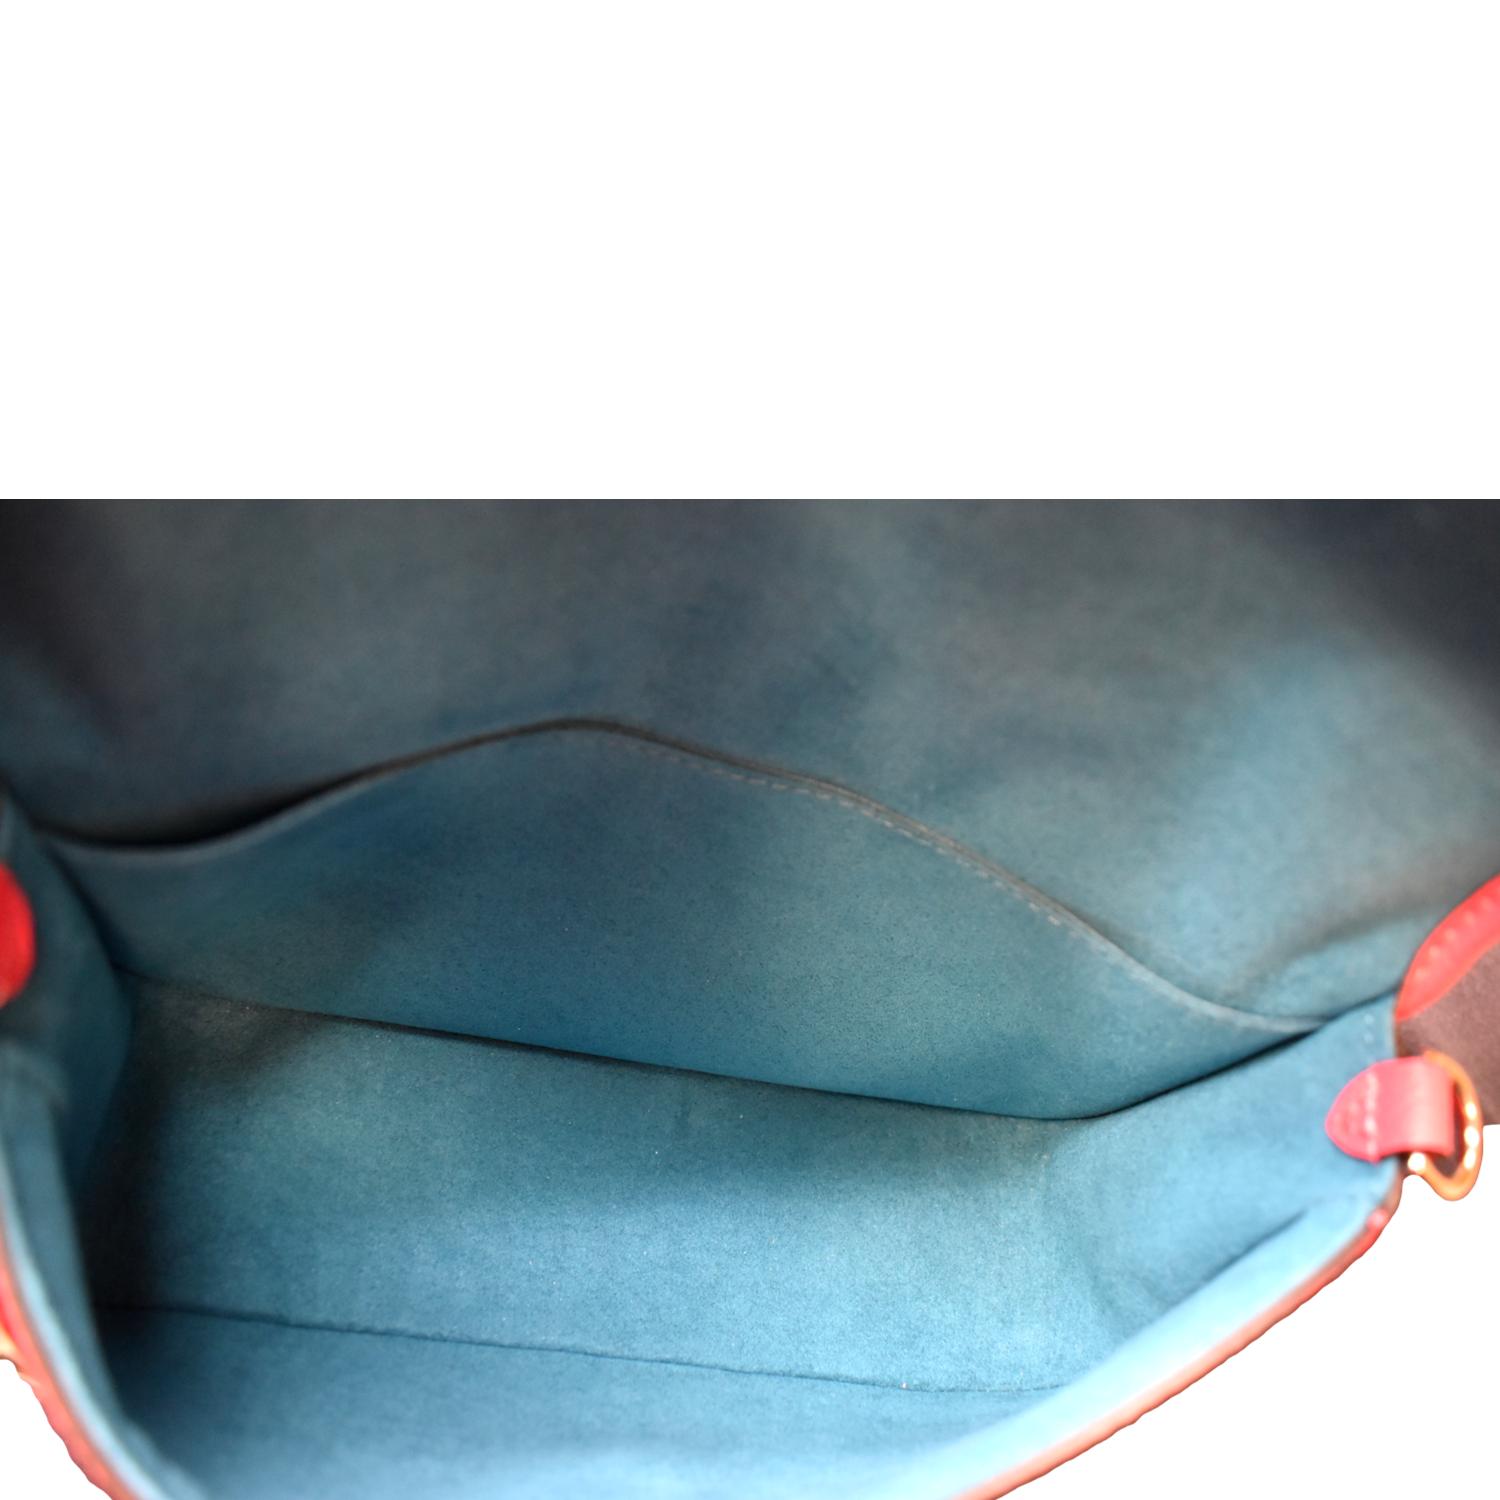 Louis Vuitton Buci Crossbody Bag Epi Leather Pink